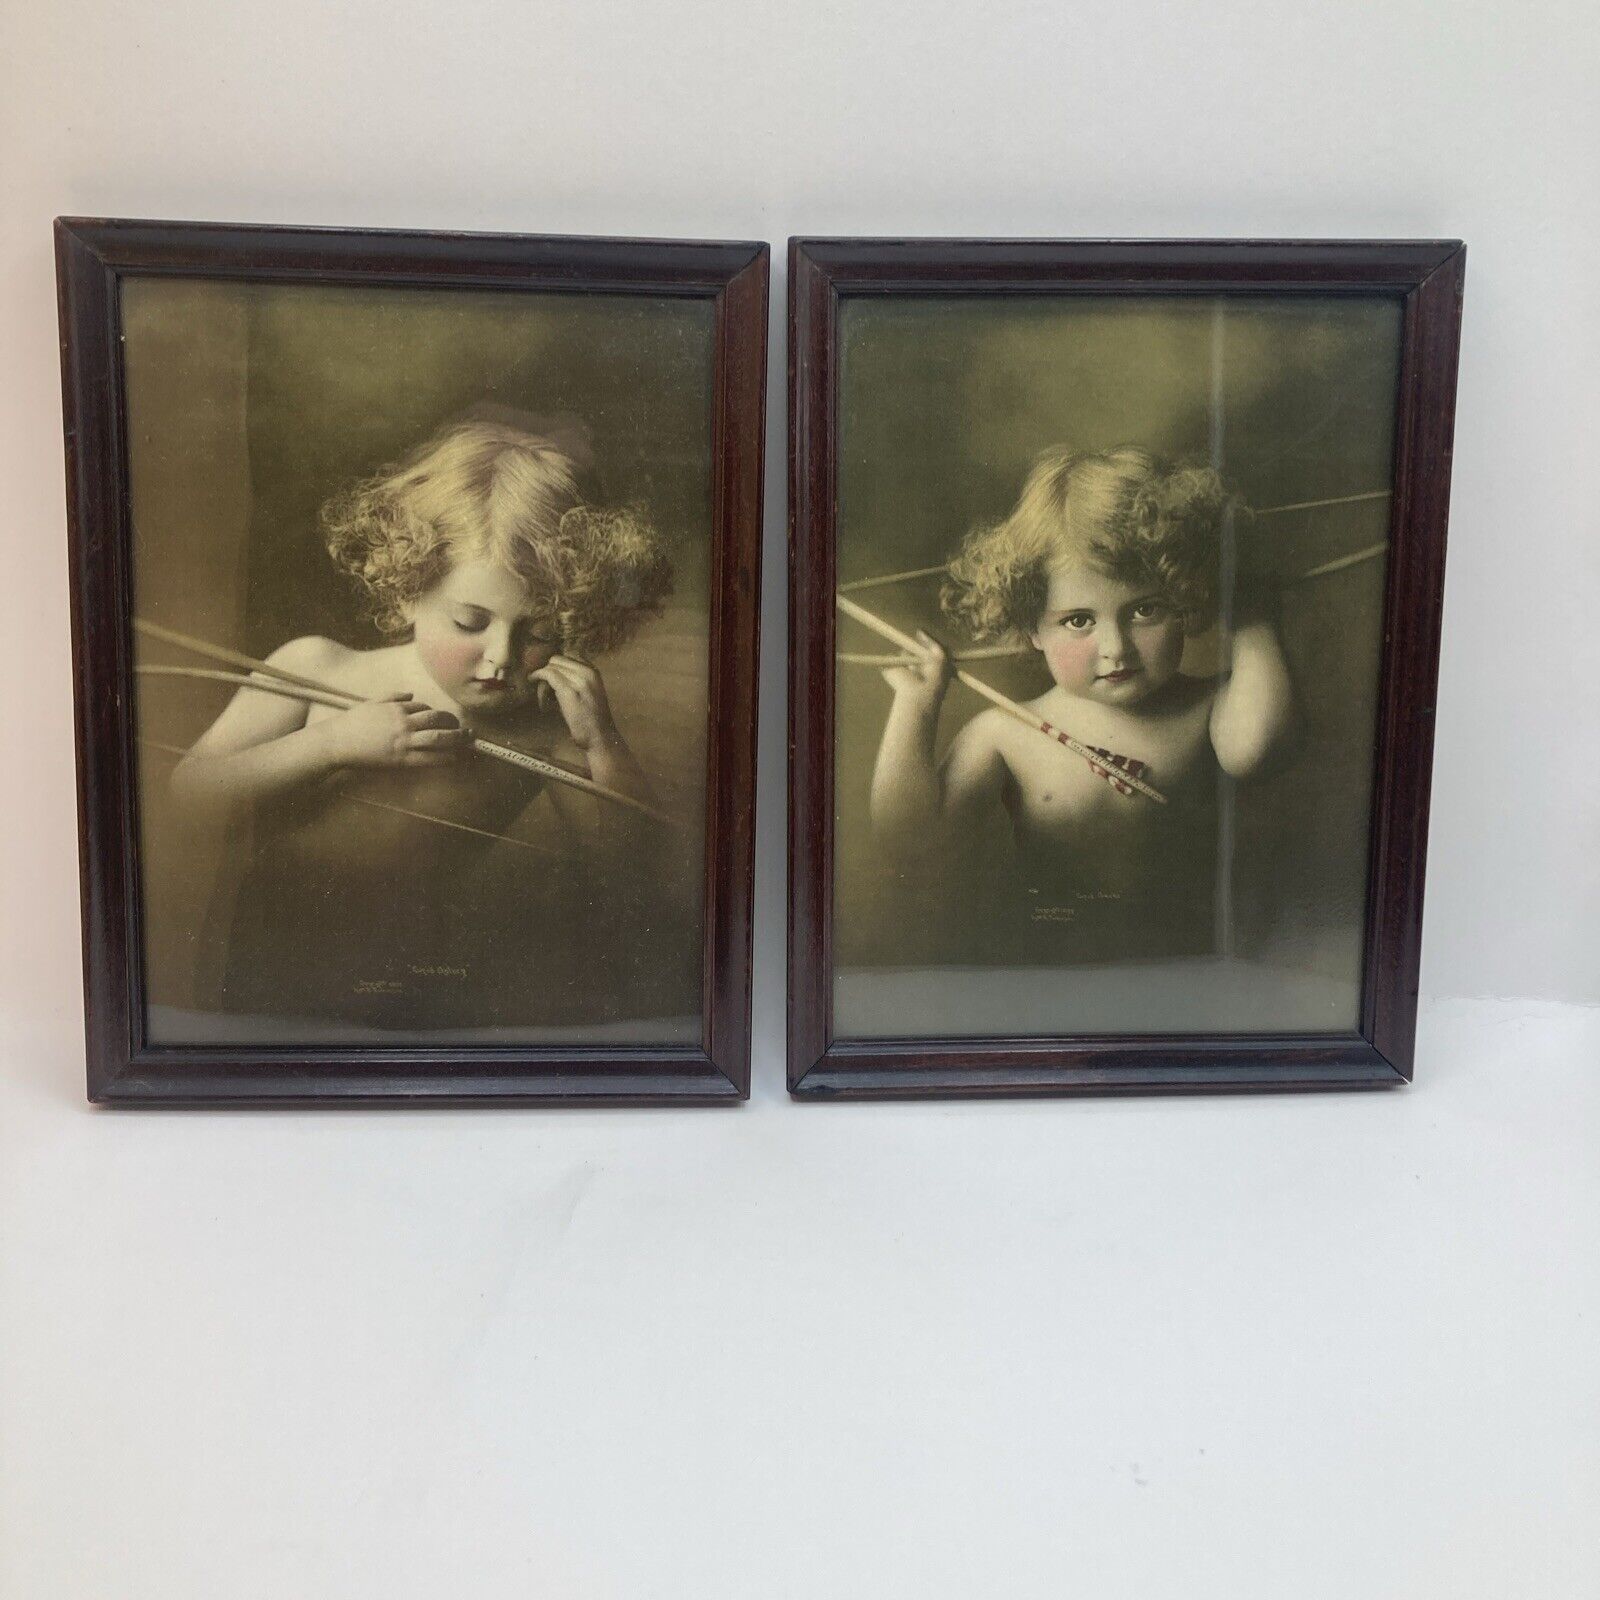 Antique M. B. Parkinson “Cupid Awake” And “Cupid Asleep” Framed Prints 1897